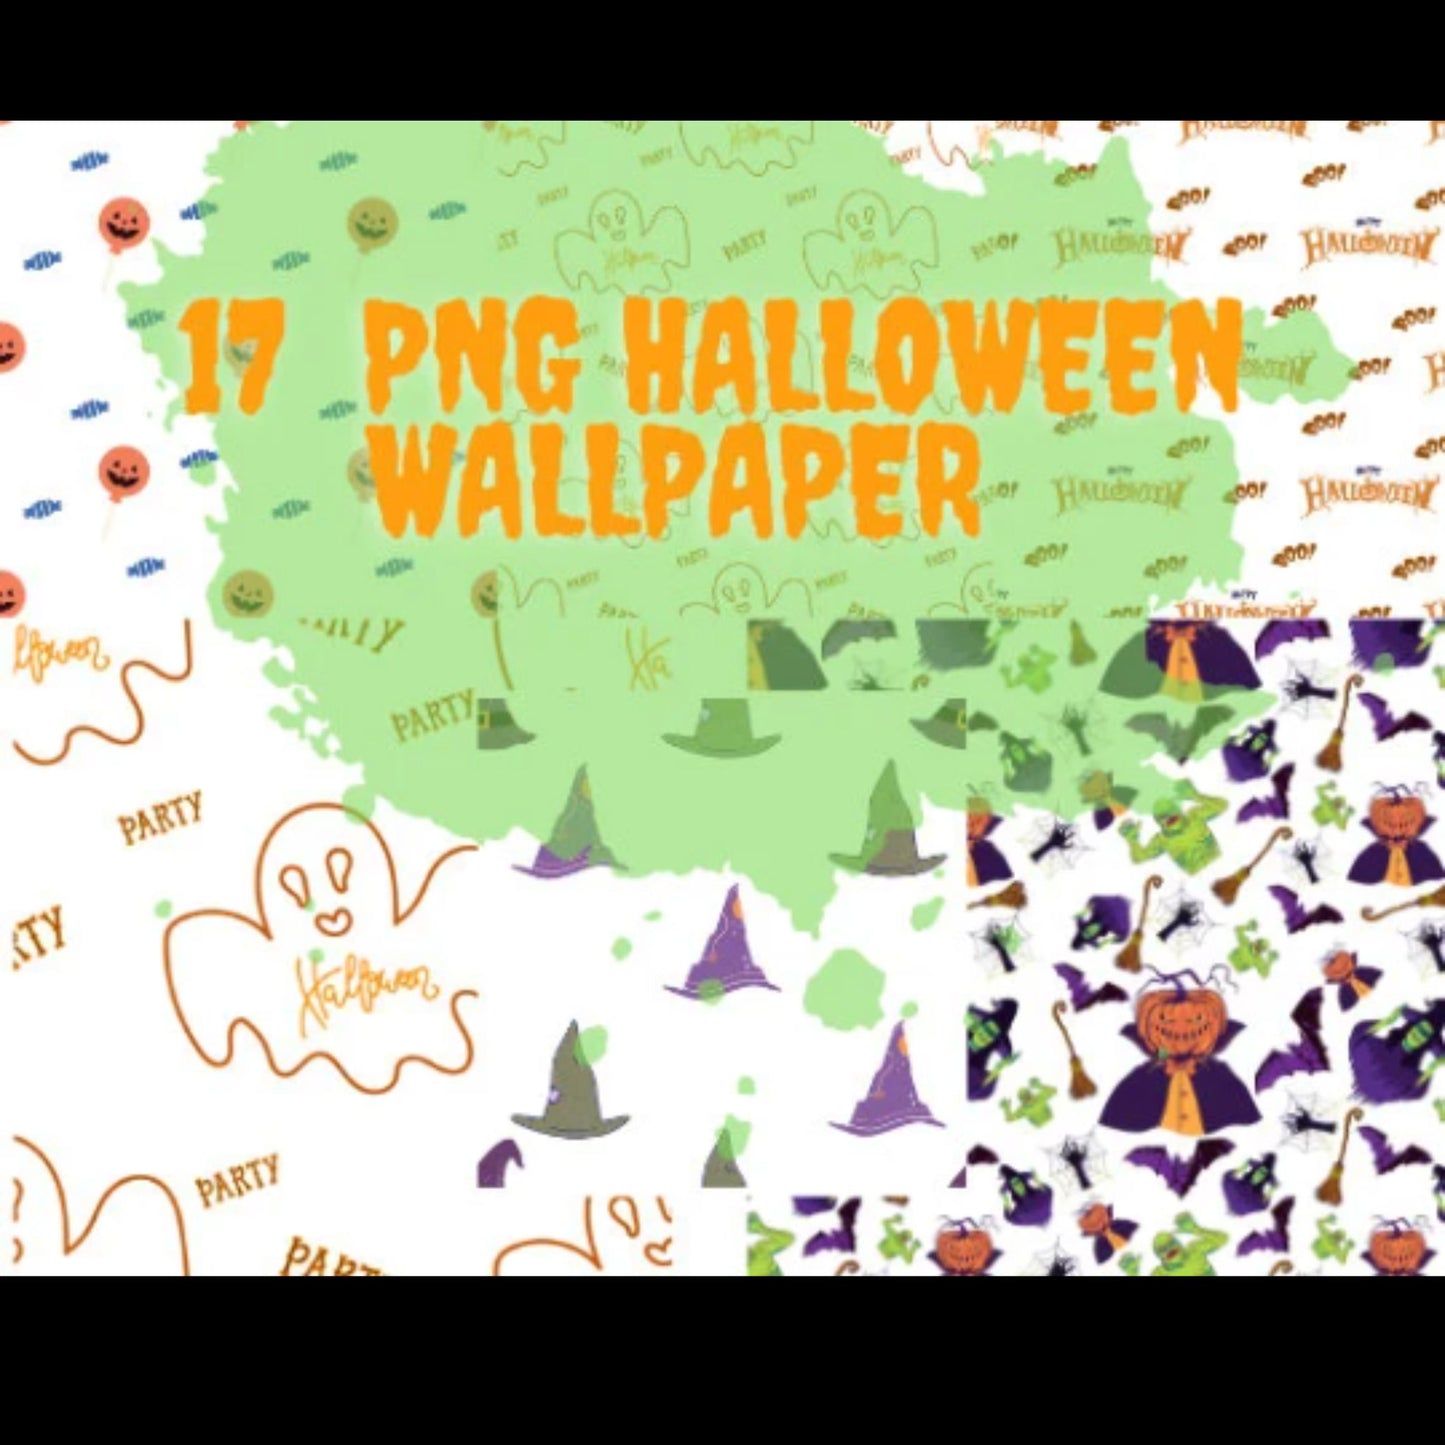 Halloween Wallpaper Designs Halloween Spooky designs, Halloween Gnomes, Halloween PNG Bundle designs, Spooky vibes, Dancing Skeletons Letters, Pumpkin faces png